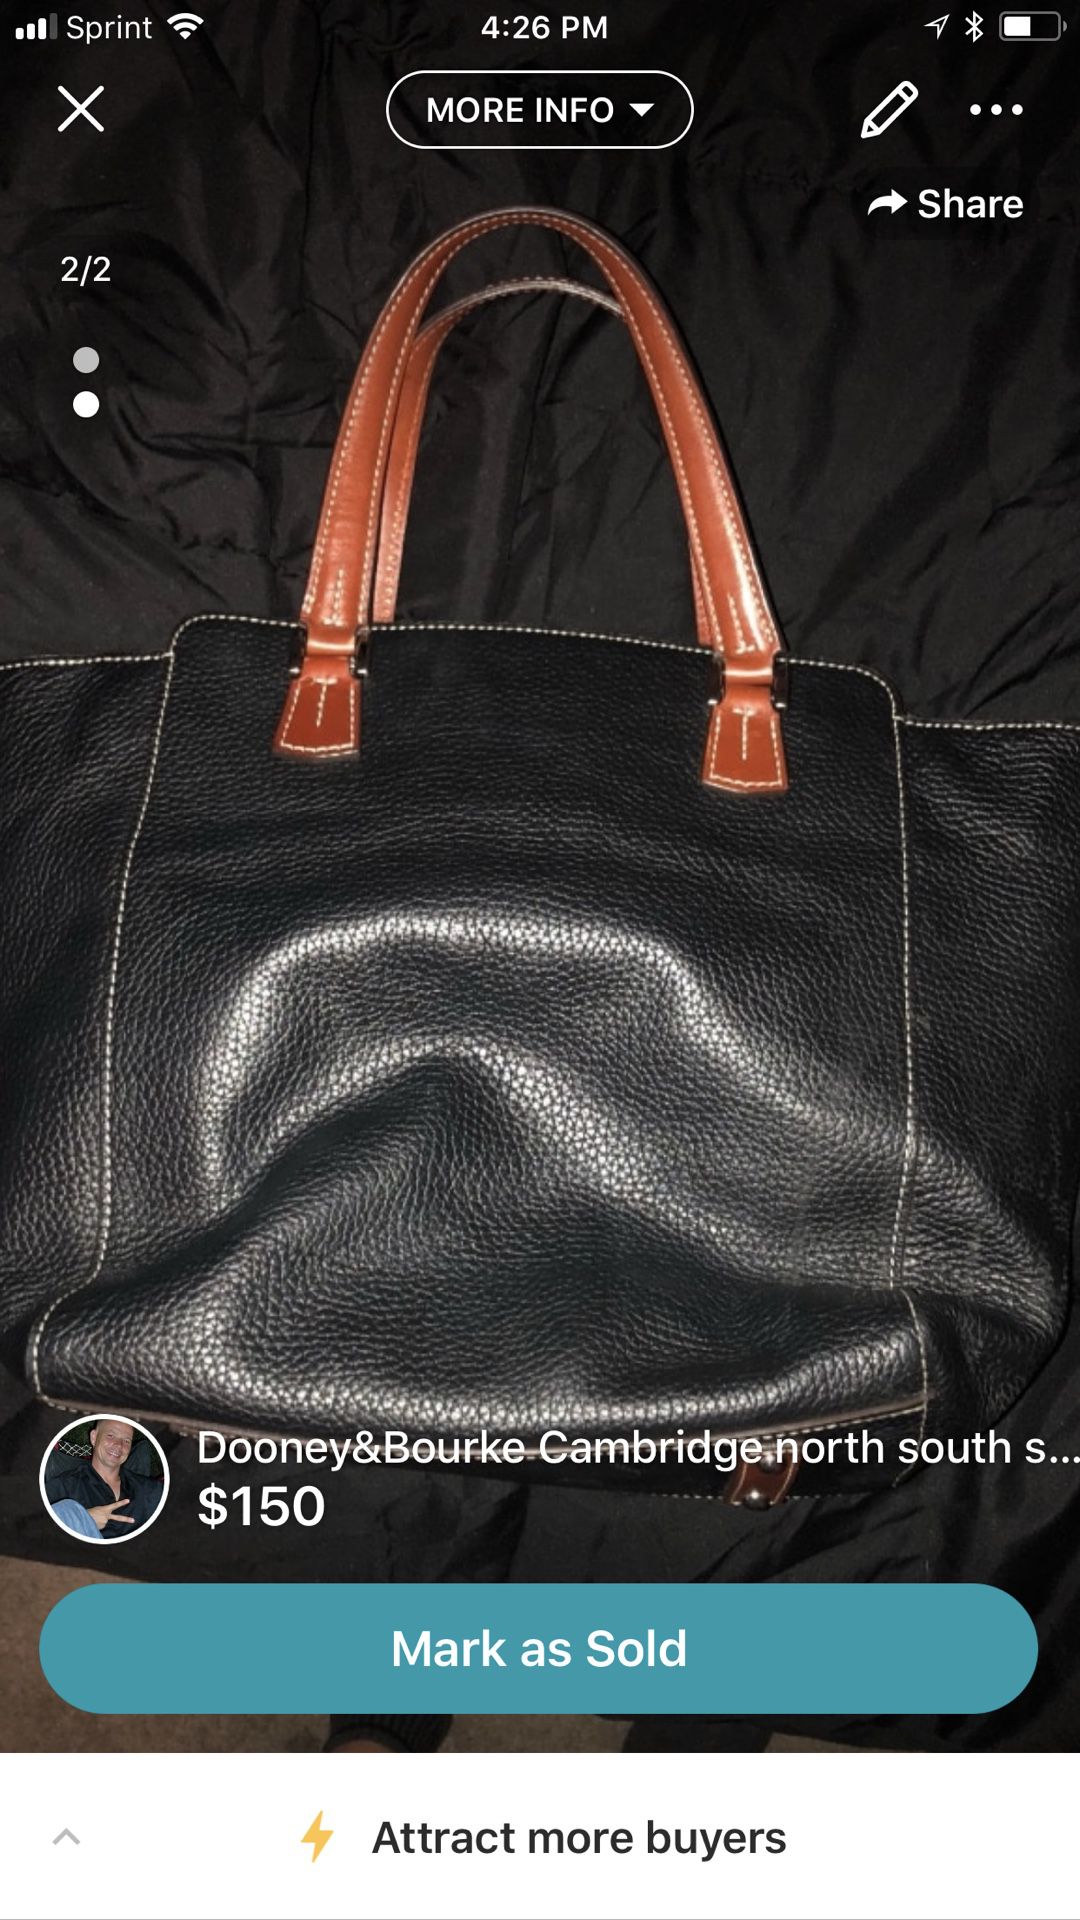 Dooney &Bourke purse